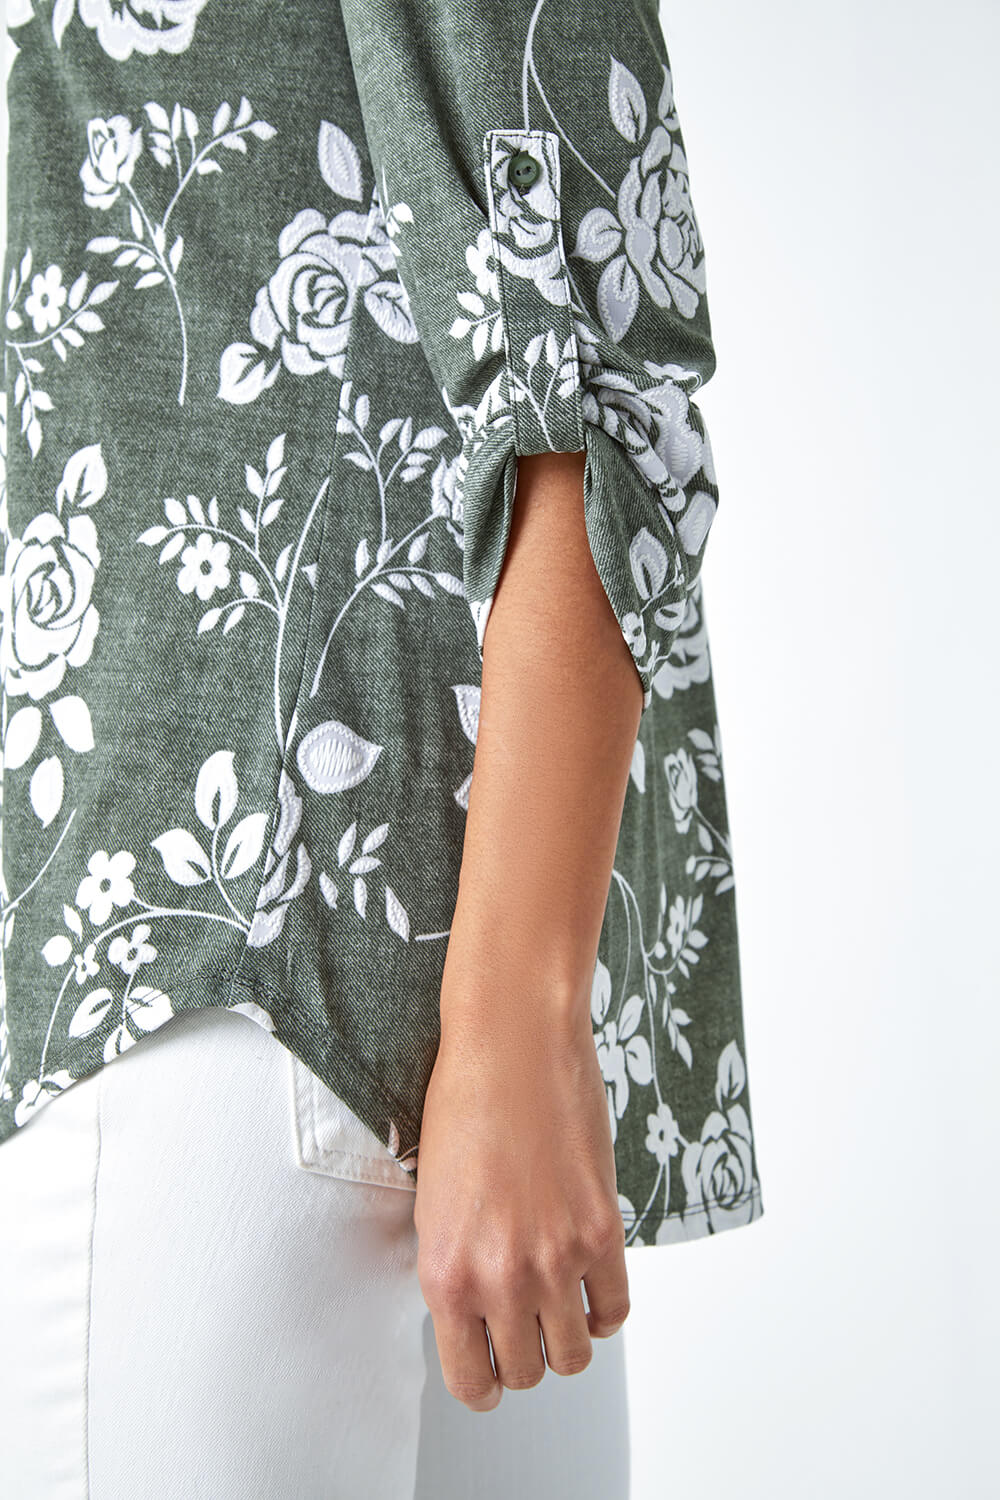 KHAKI Textured Floral Print Stretch Shirt, Image 5 of 5